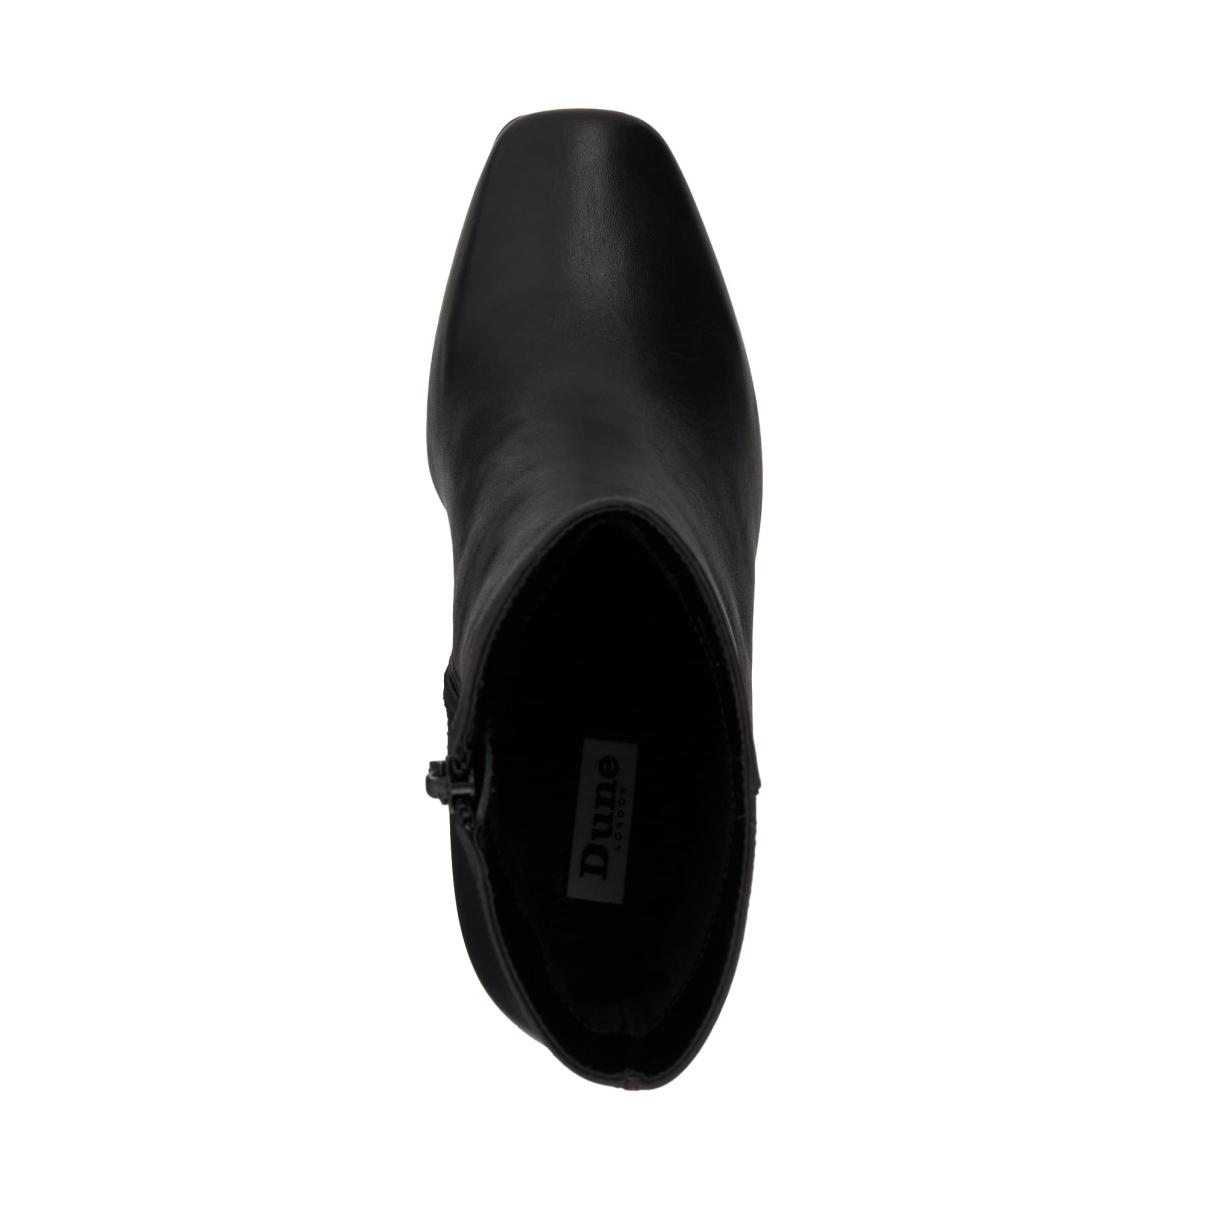 Oxygen - Black Ankle Boots Dune London Women - 1